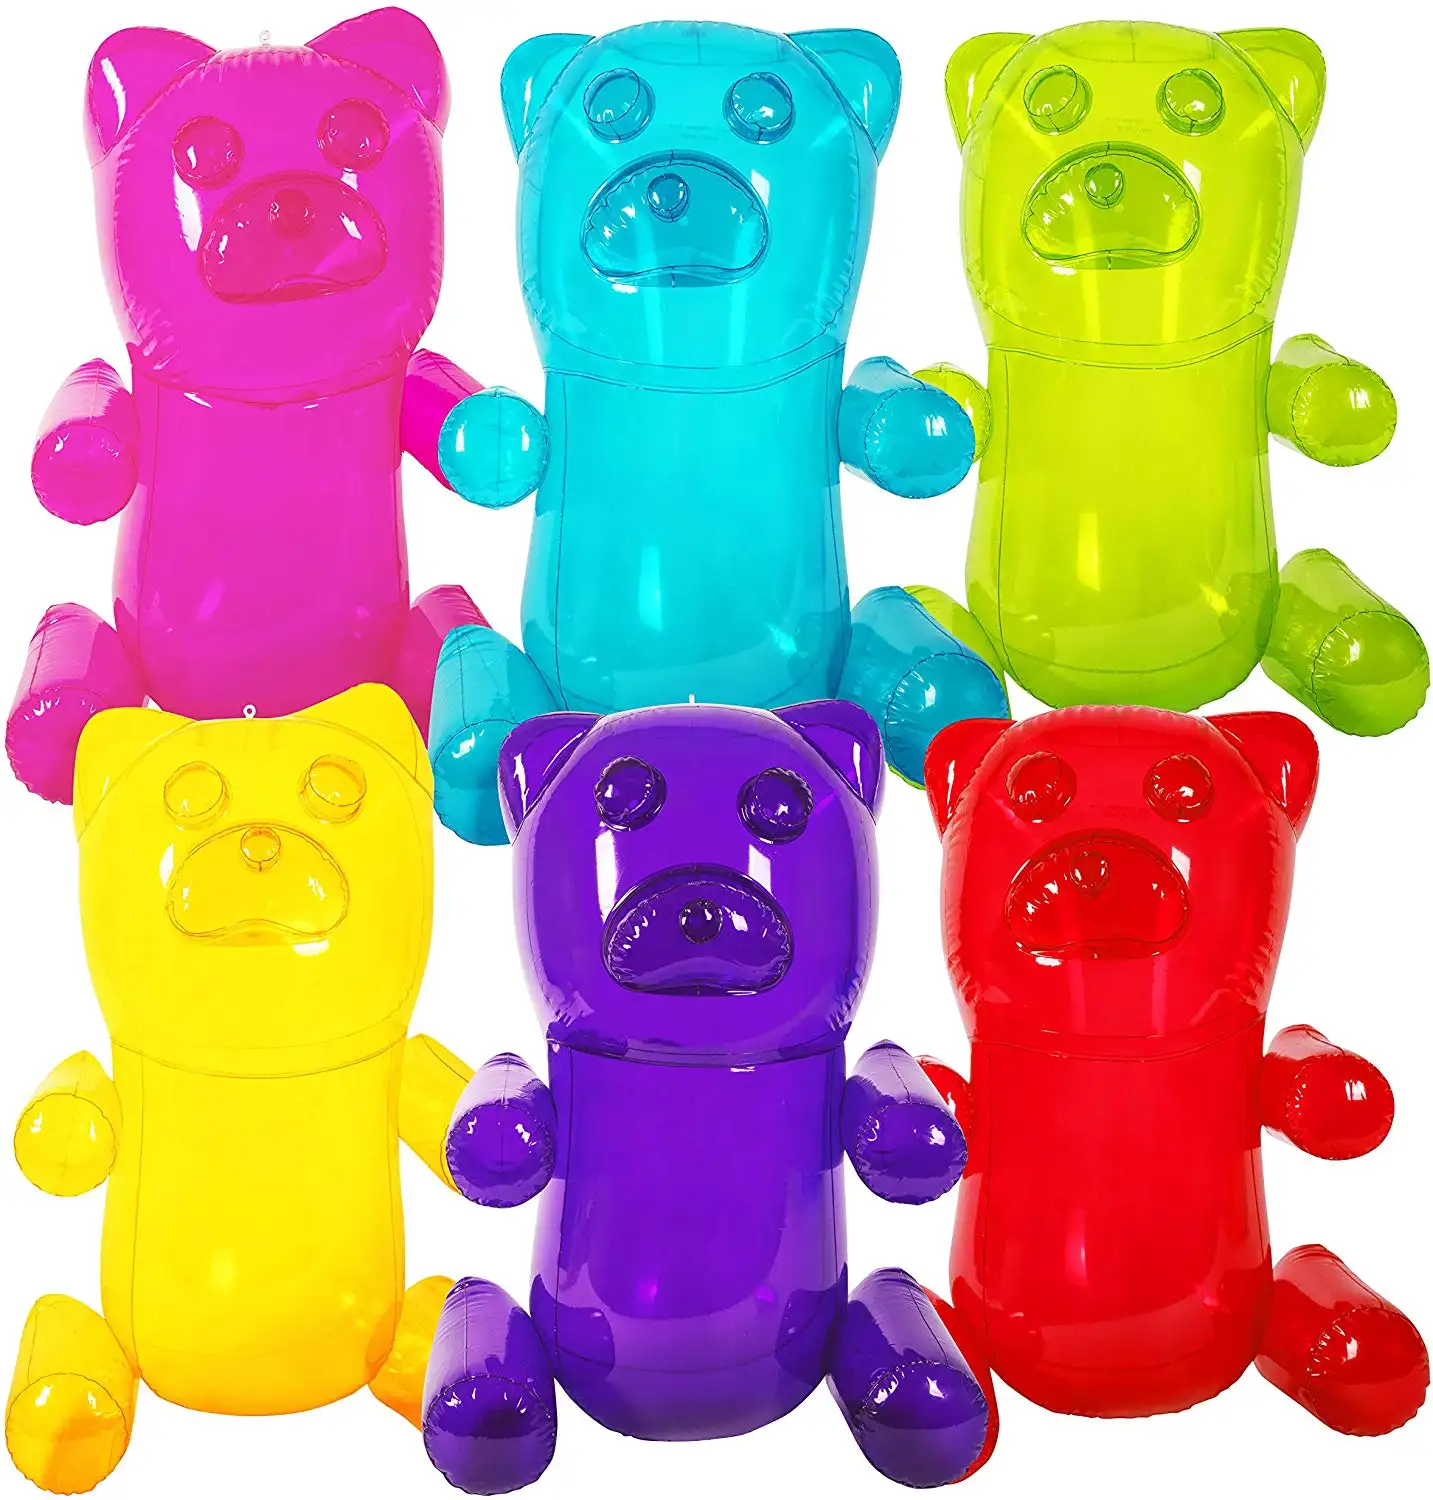 Chico jugar encantadora ositos de goma colorido inflable oso globo de juguete